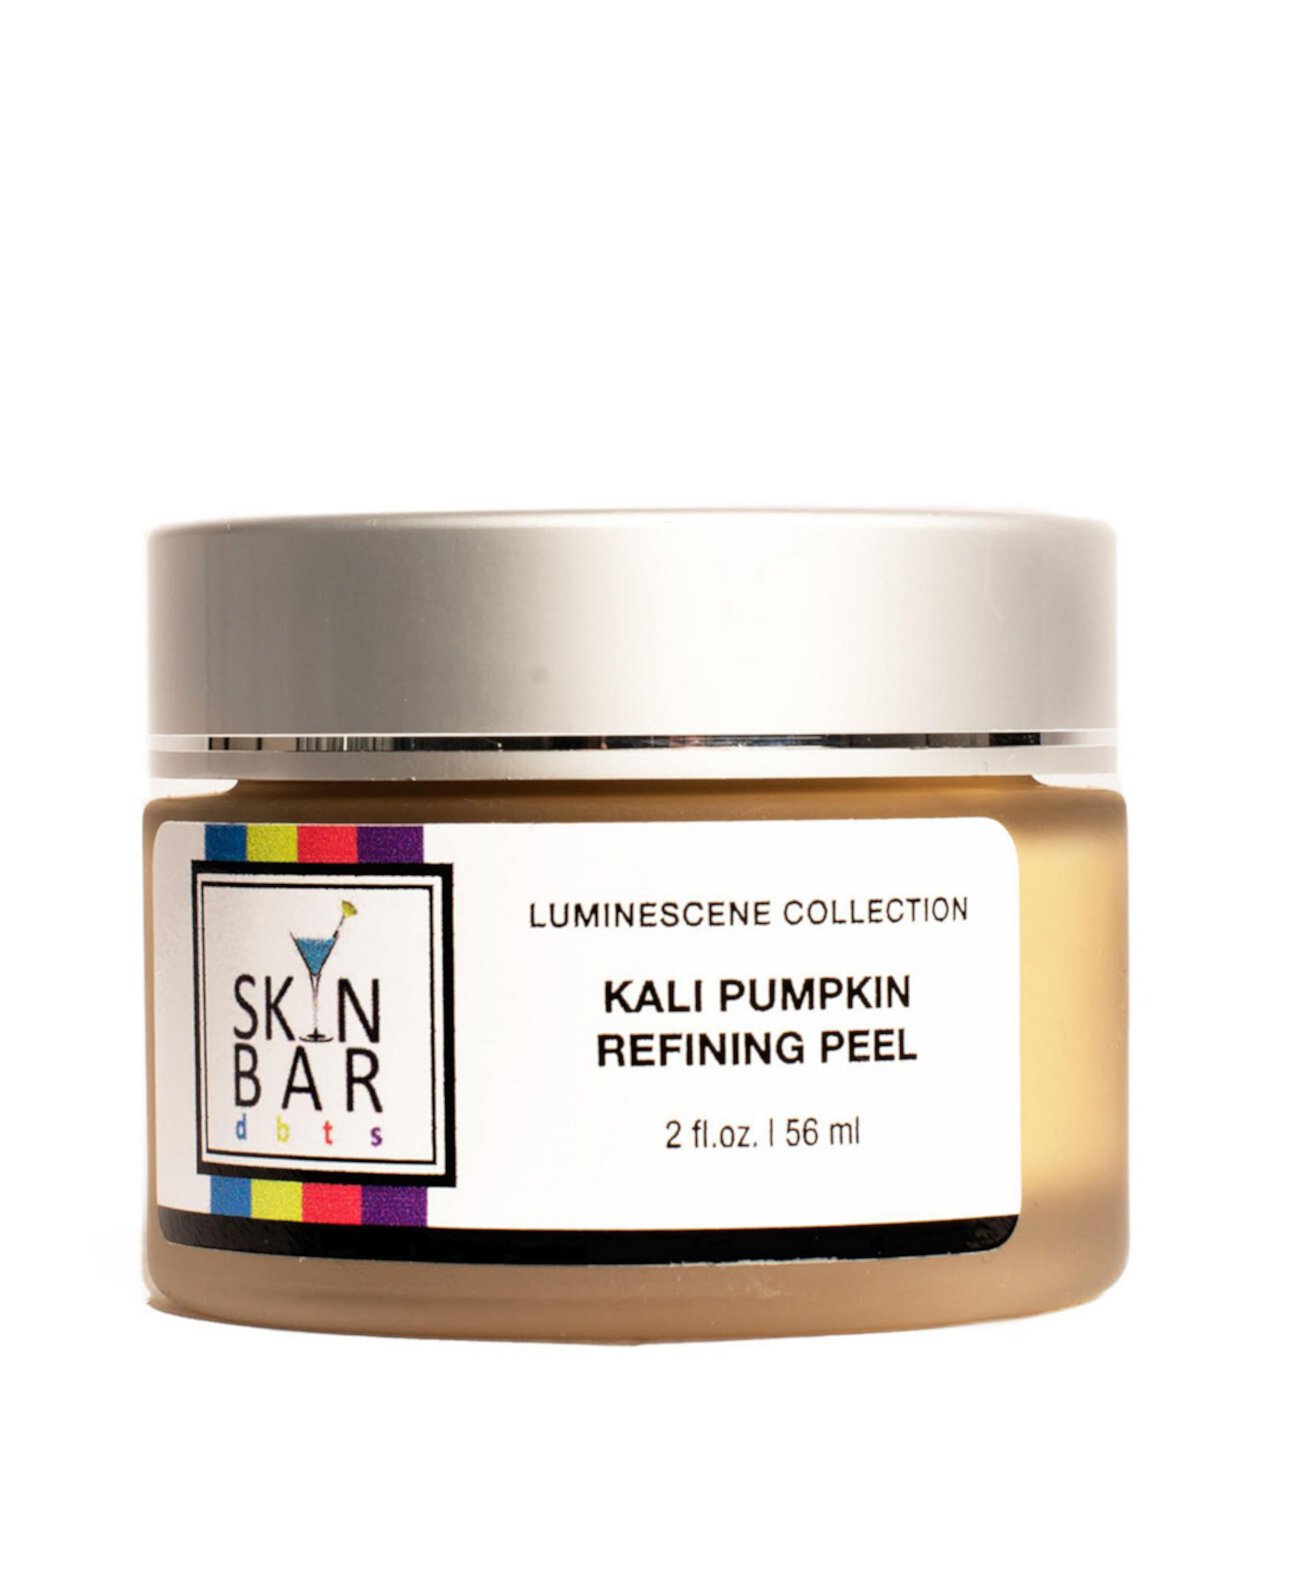 Kali Pumpkin Refining Peel DBTS Skin Bar